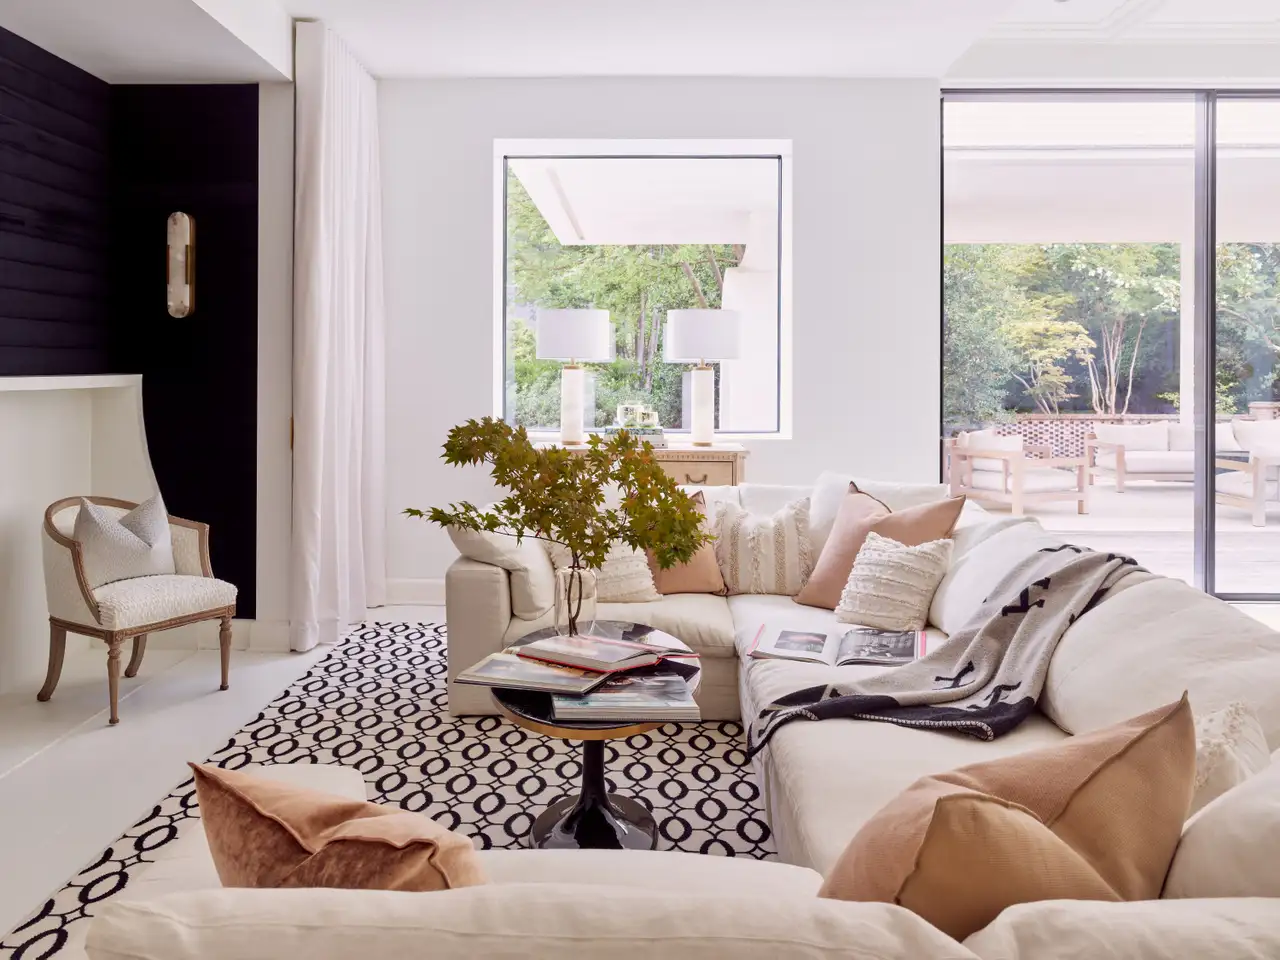 Cozy, modern living room in neutral tones